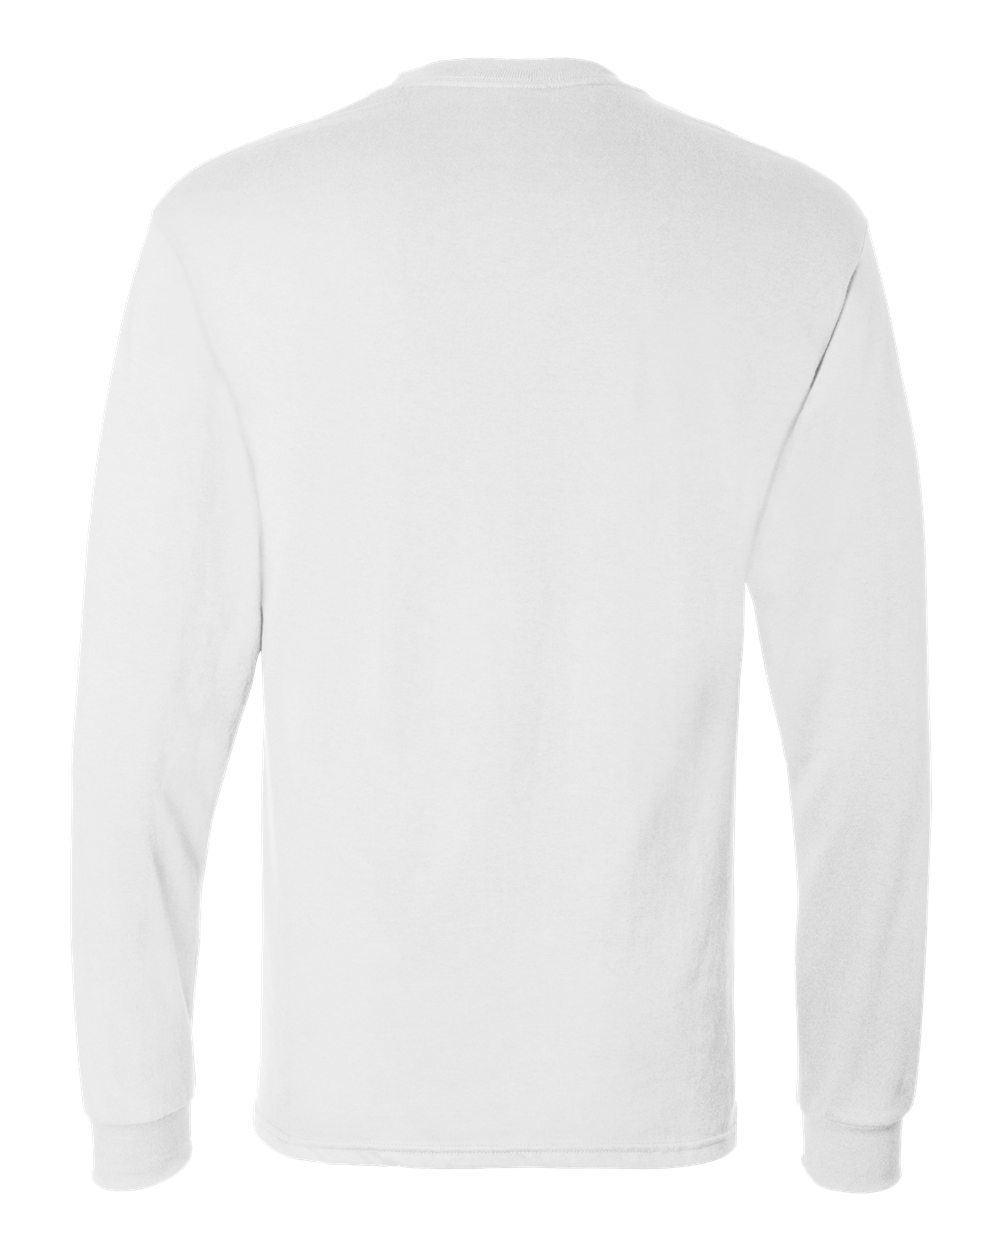 Mens 5.2 oz. ComfortSoft Cotton Long-Sleeve T-Shirt 5286 (2 PACK) - image 3 of 3